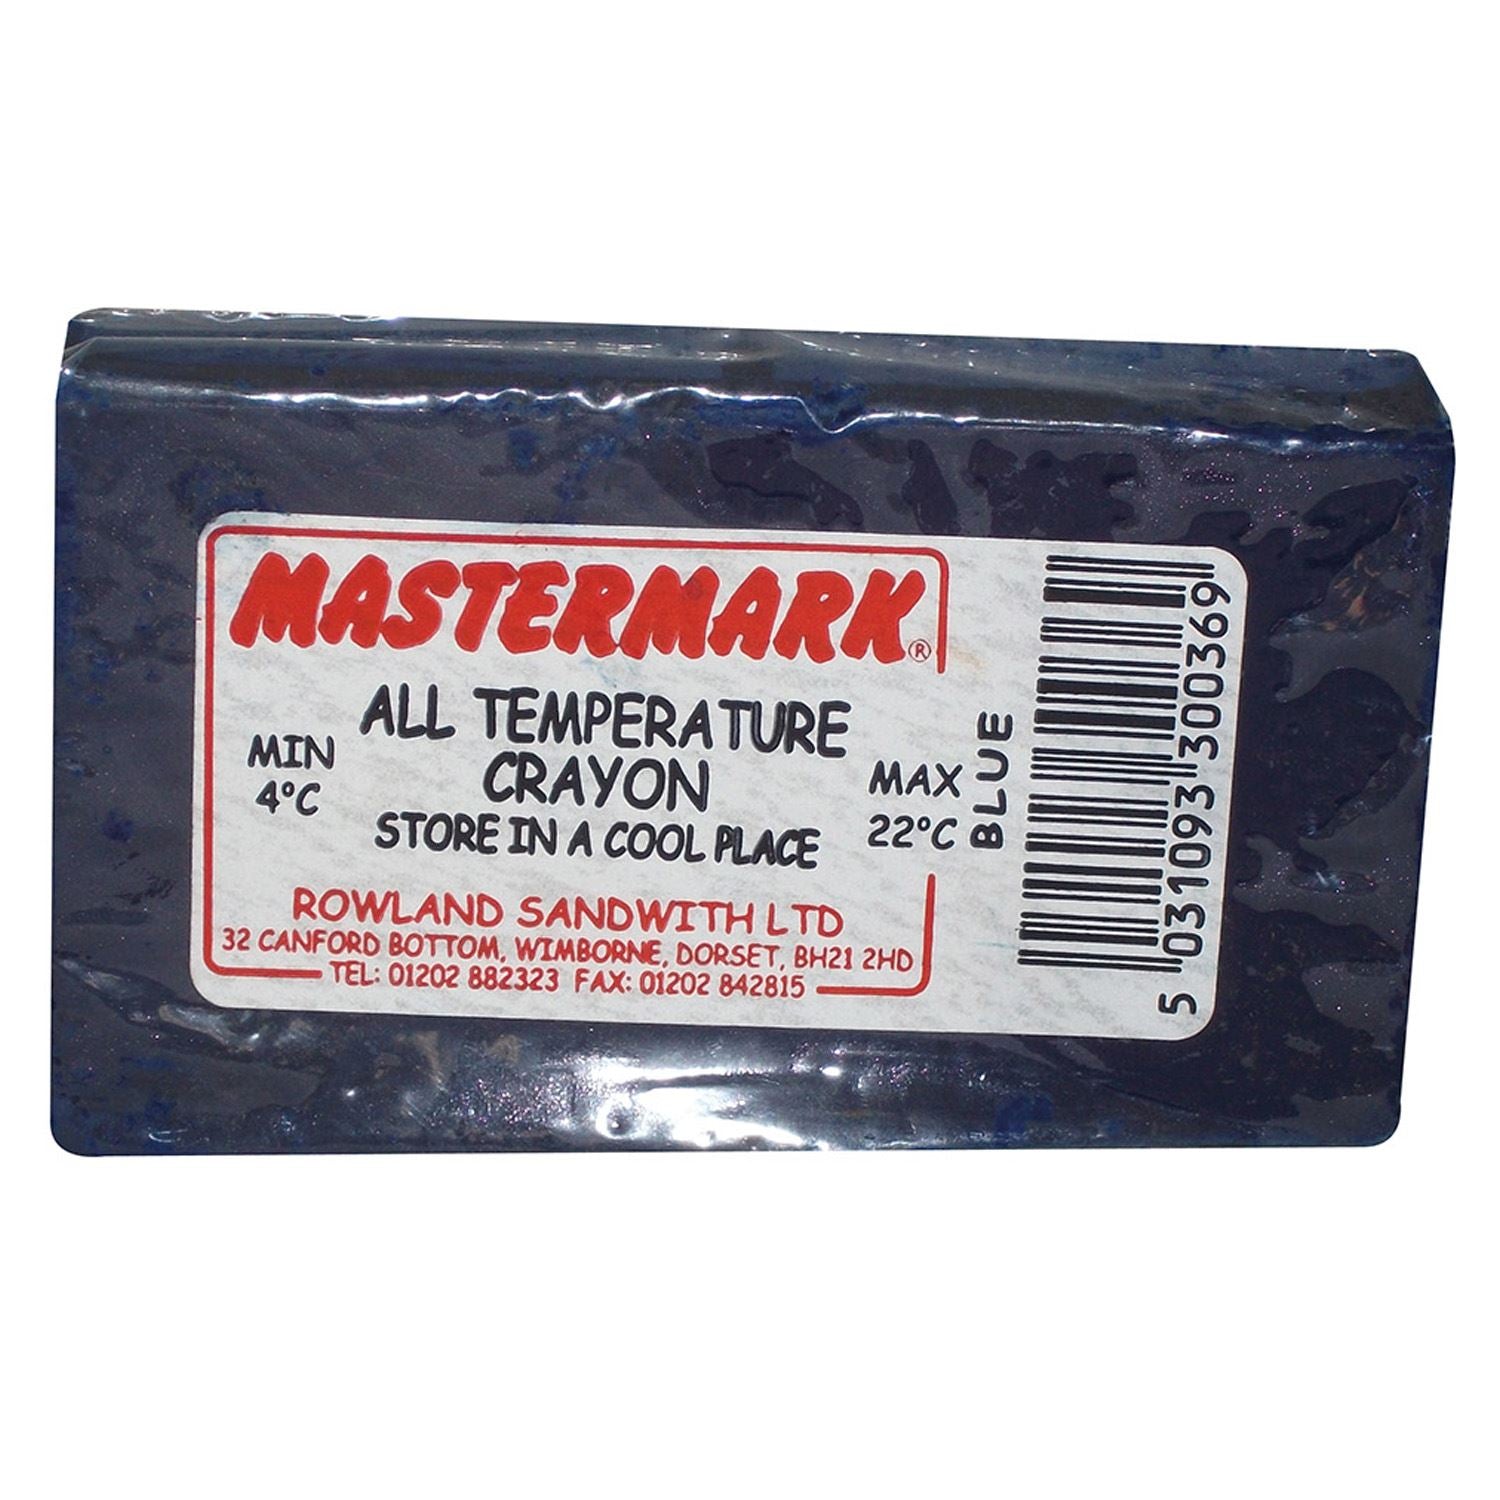 Mastermark All Temperature Ram Crayons - Just Horse Riders